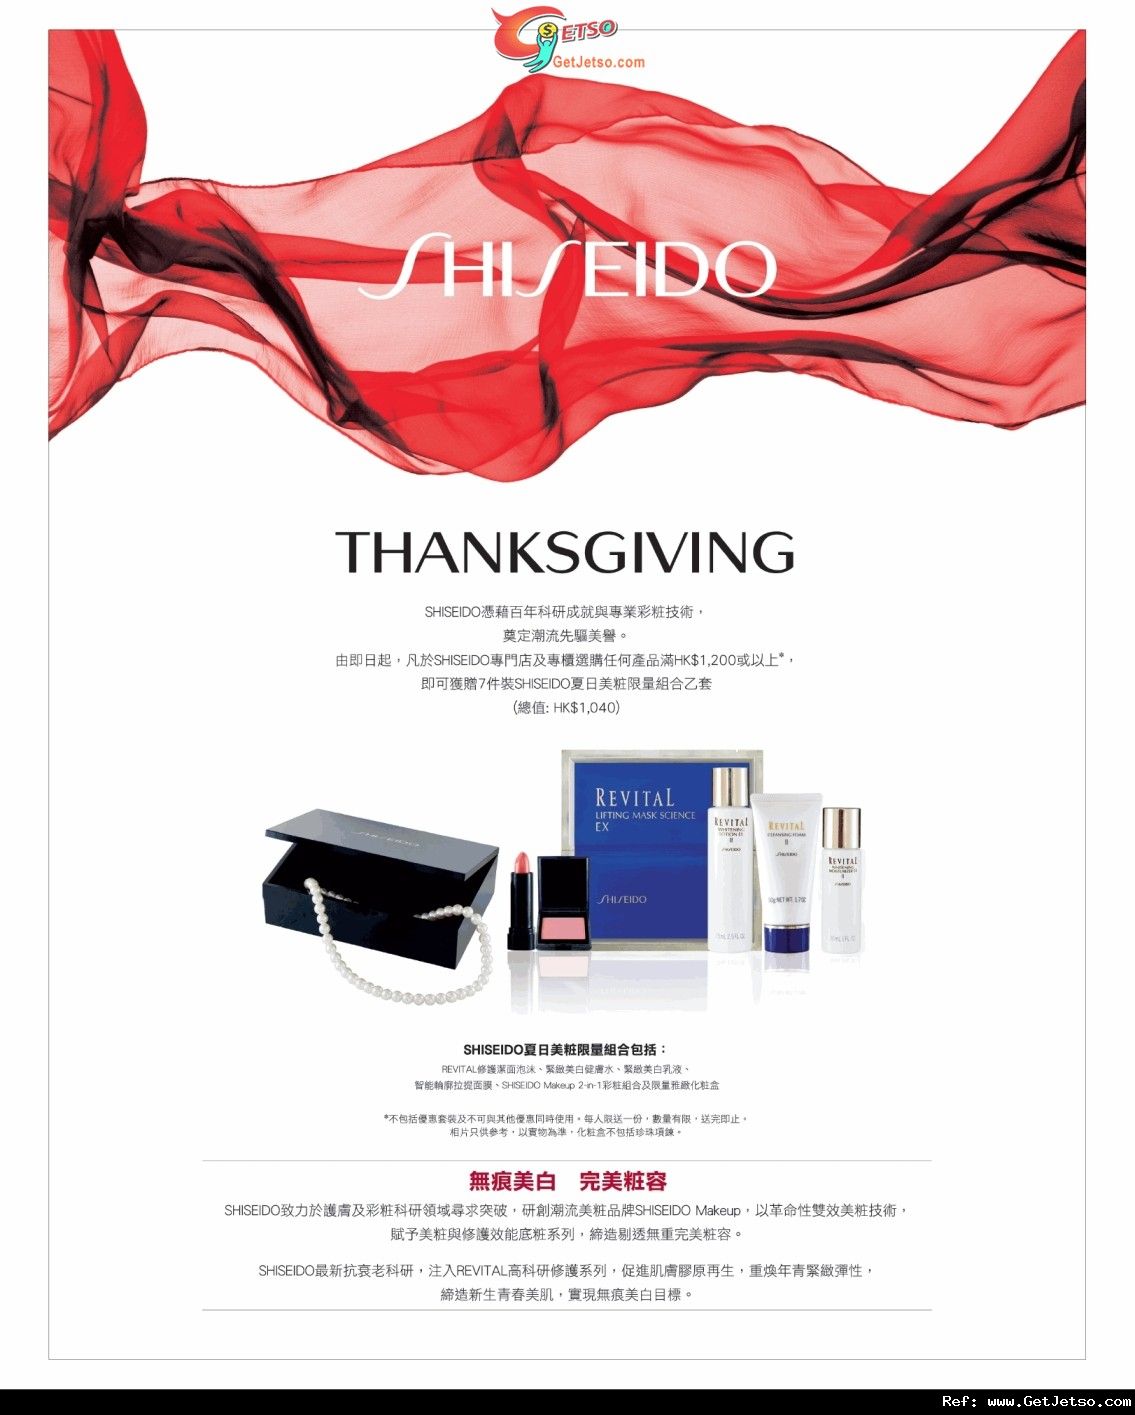 Shiseido購物滿00享免費夏日美粧限量組合優惠(至11年8月14日)圖片1